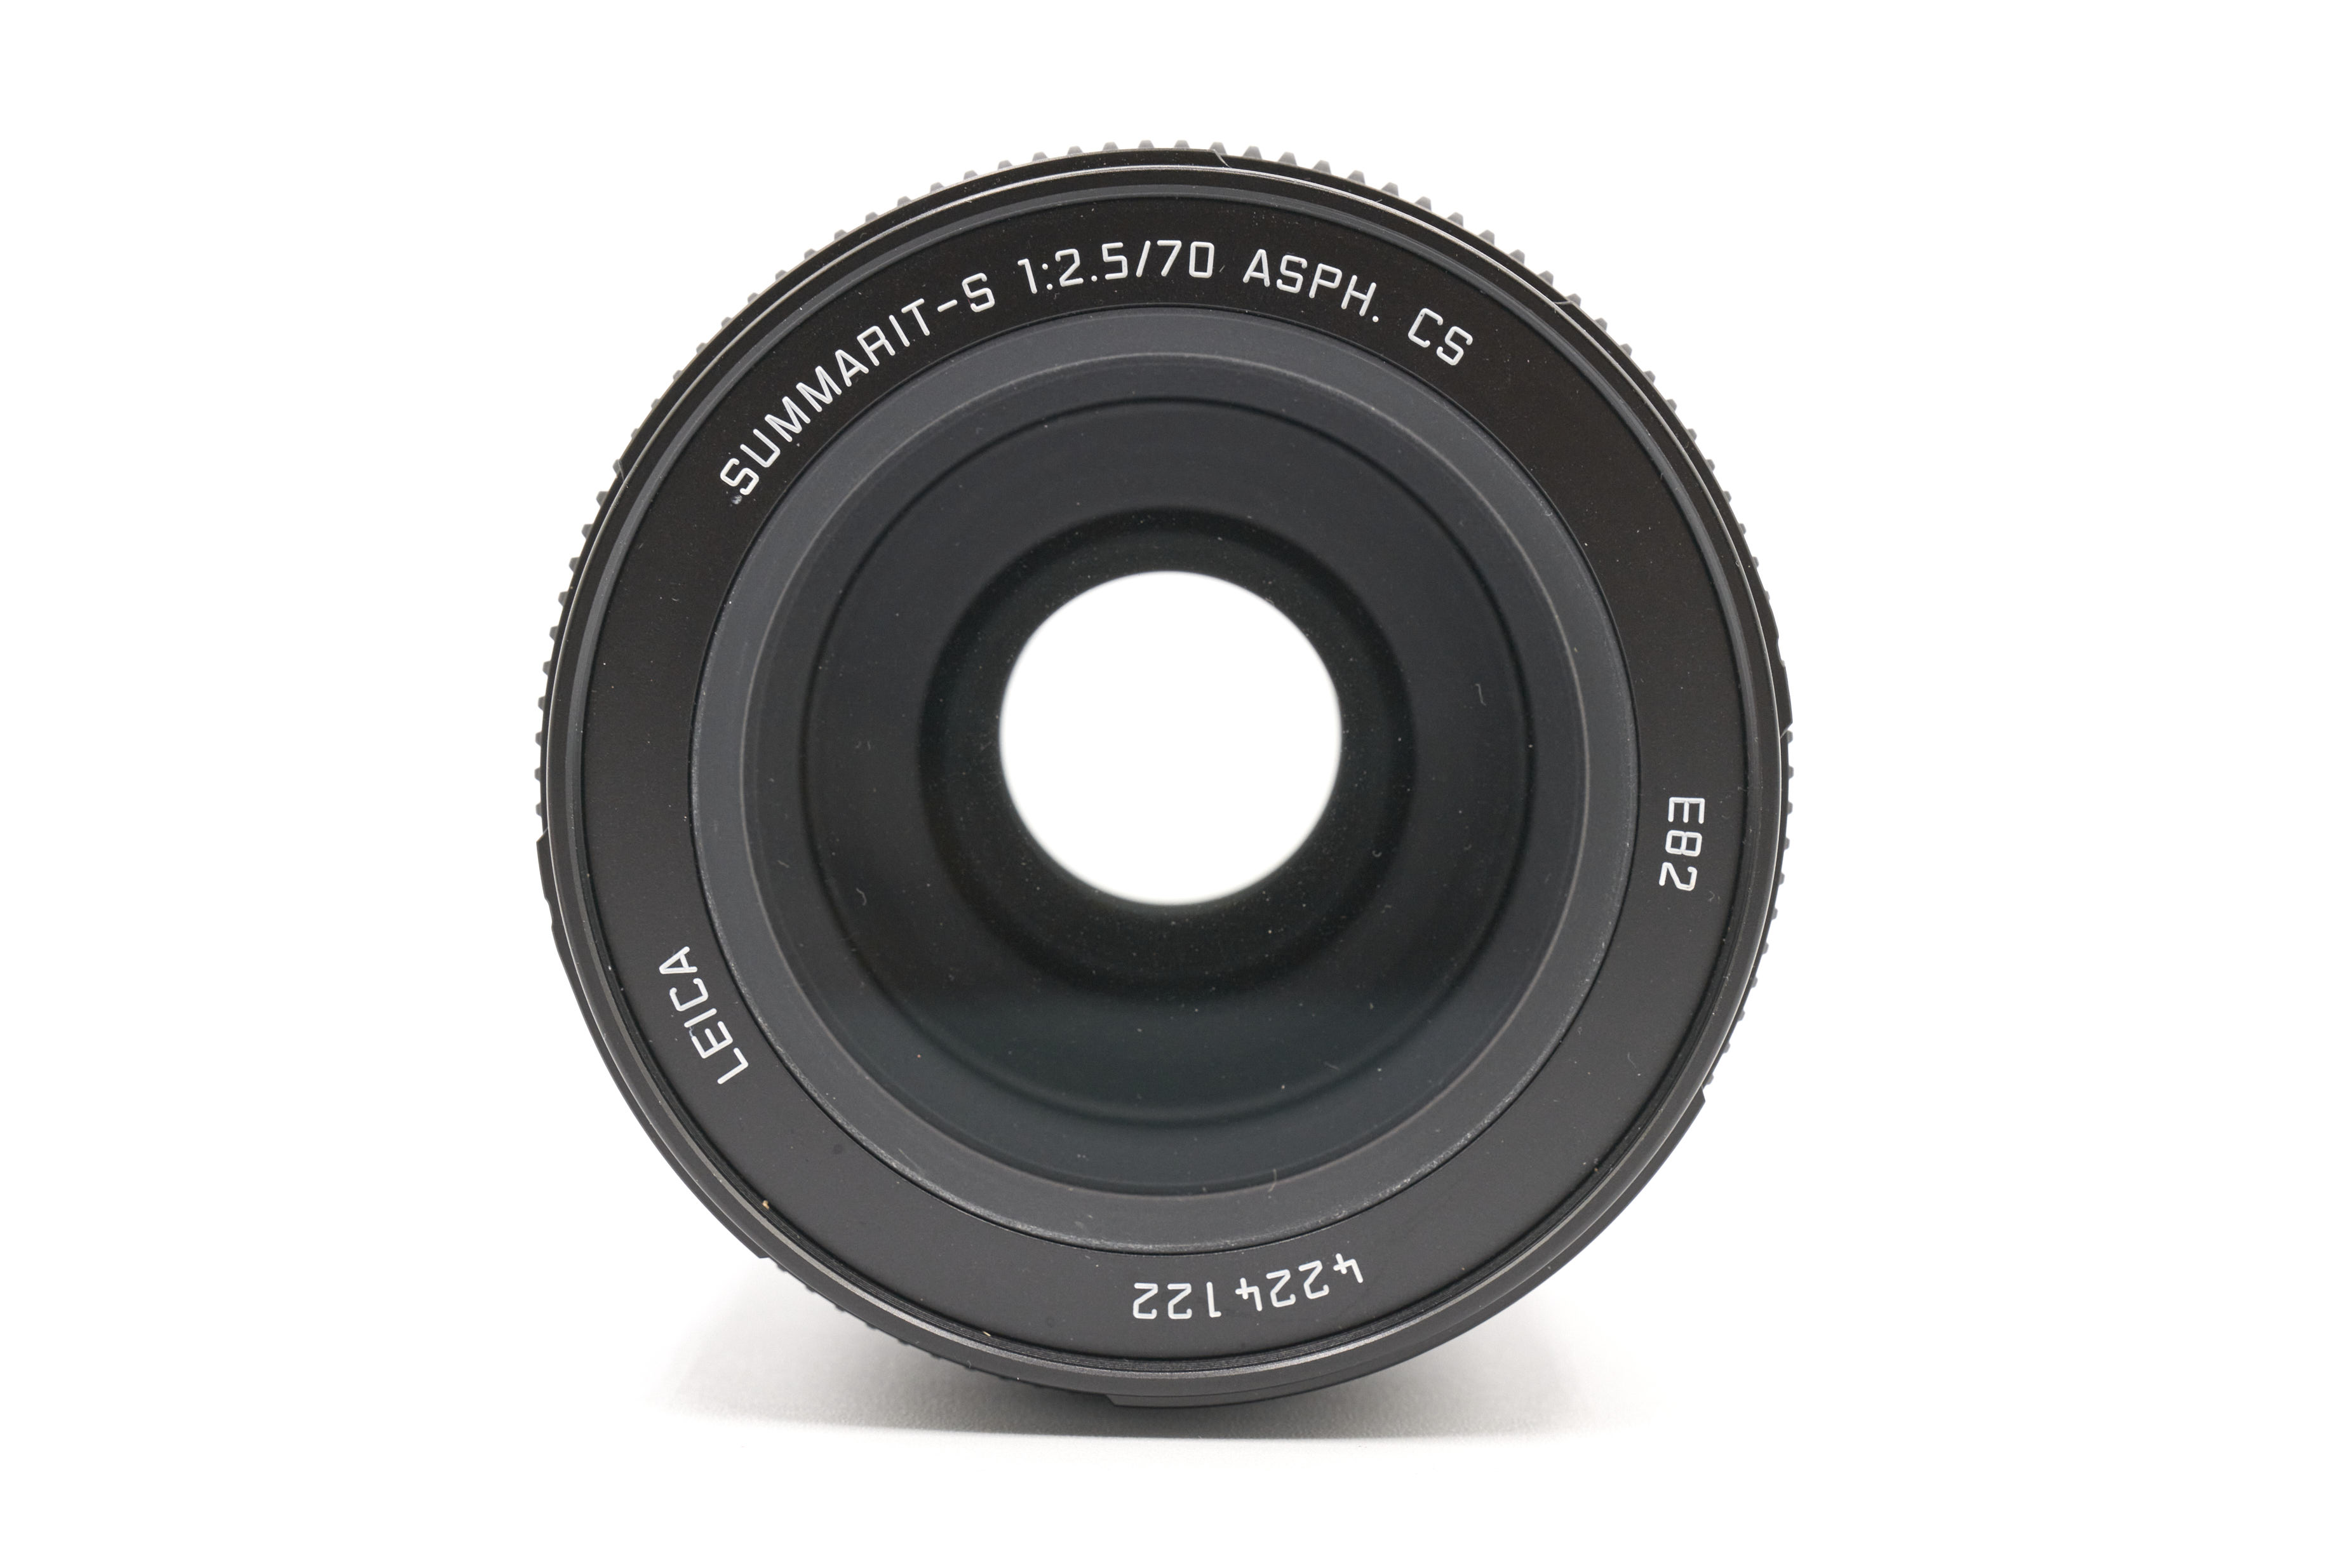 Leica Summarit-S 70mm f/2.5 ASPH. 11051